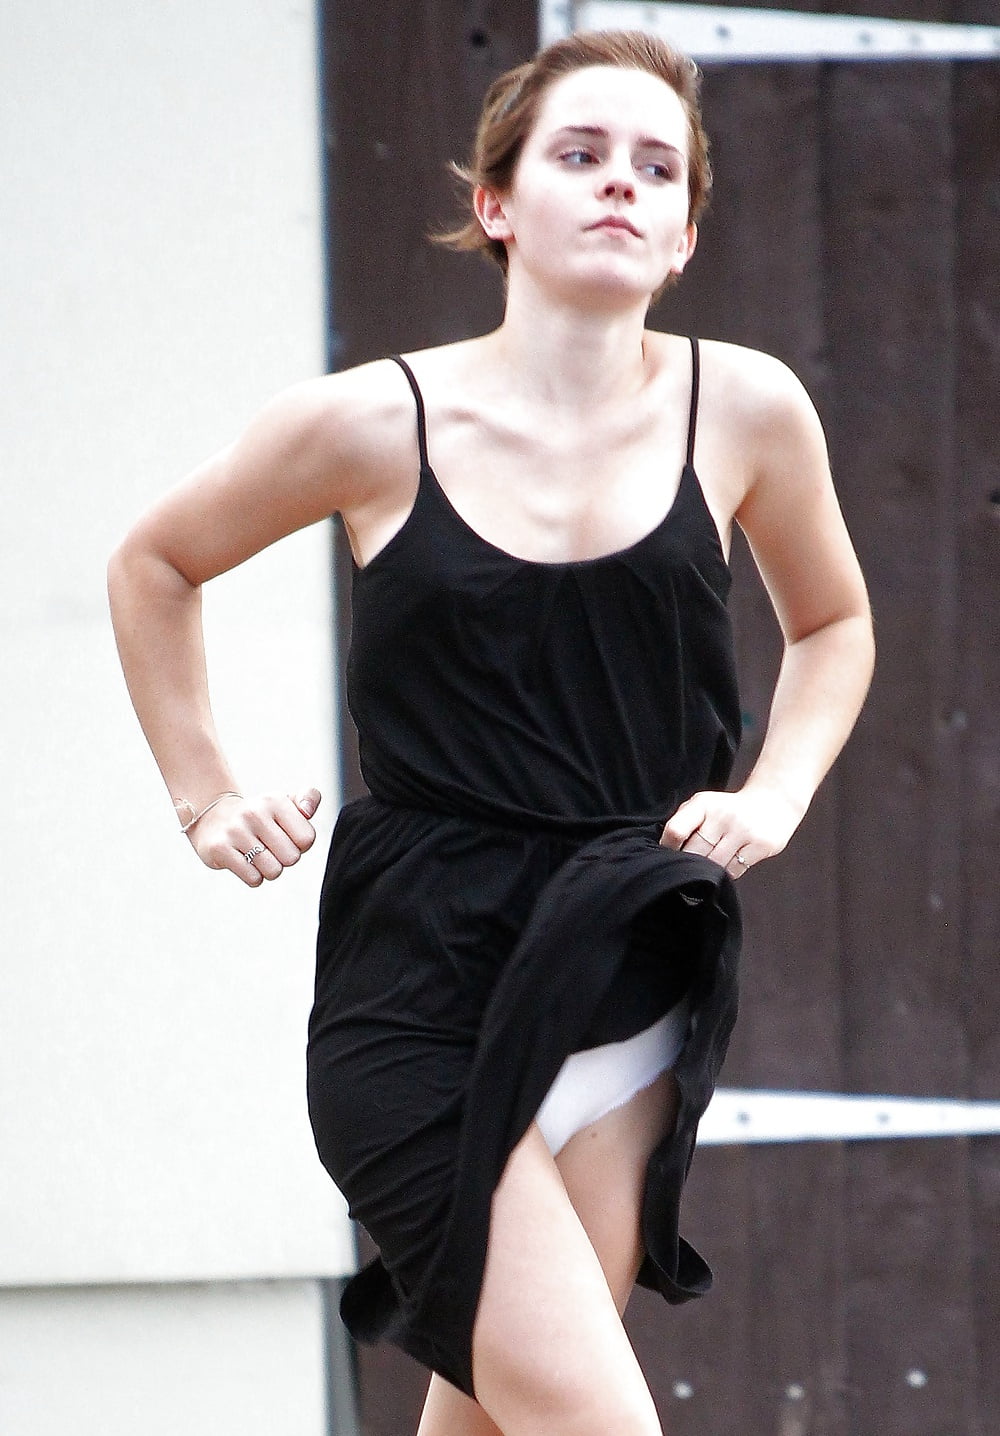 Emma Upskirt - Emma Watson Upskirt Flash (12 pictures) - Shooshtime